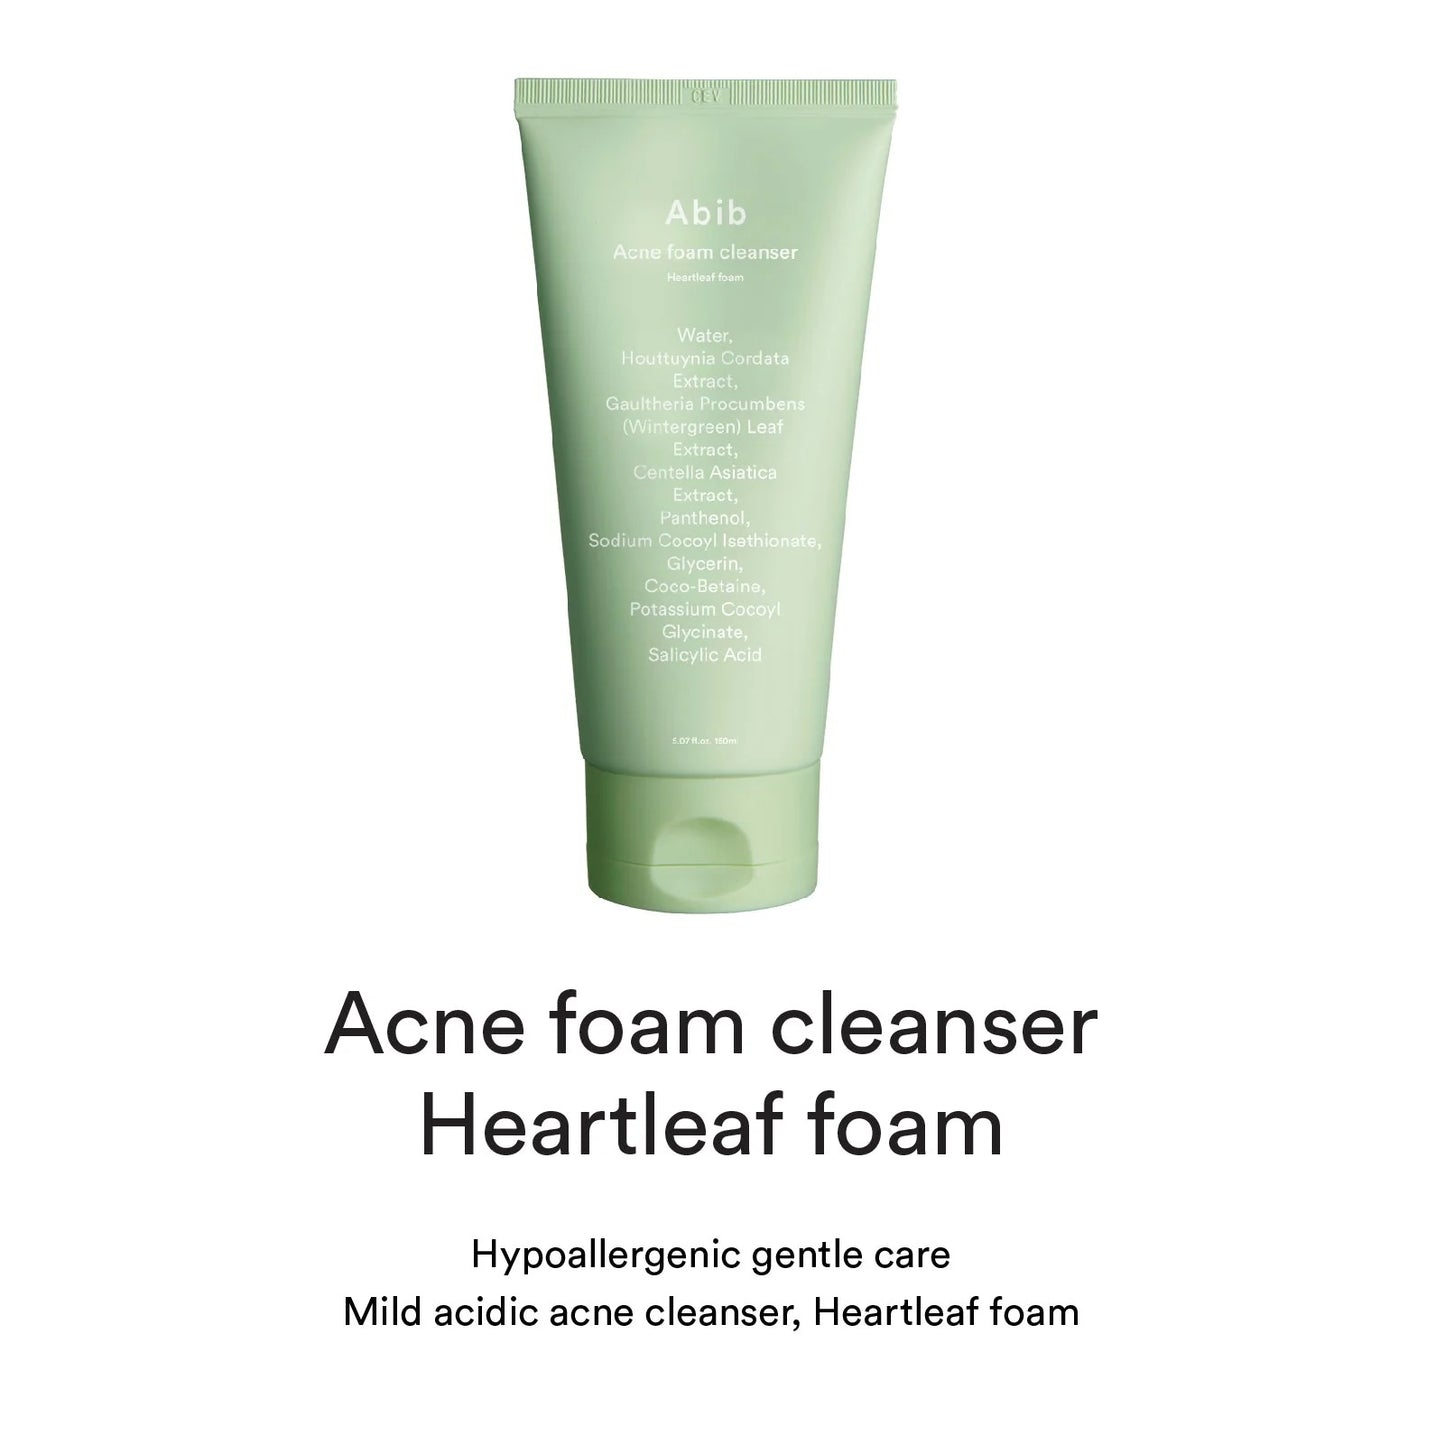 Abib Acne foam cleanser Heartleaf foam - 150ml